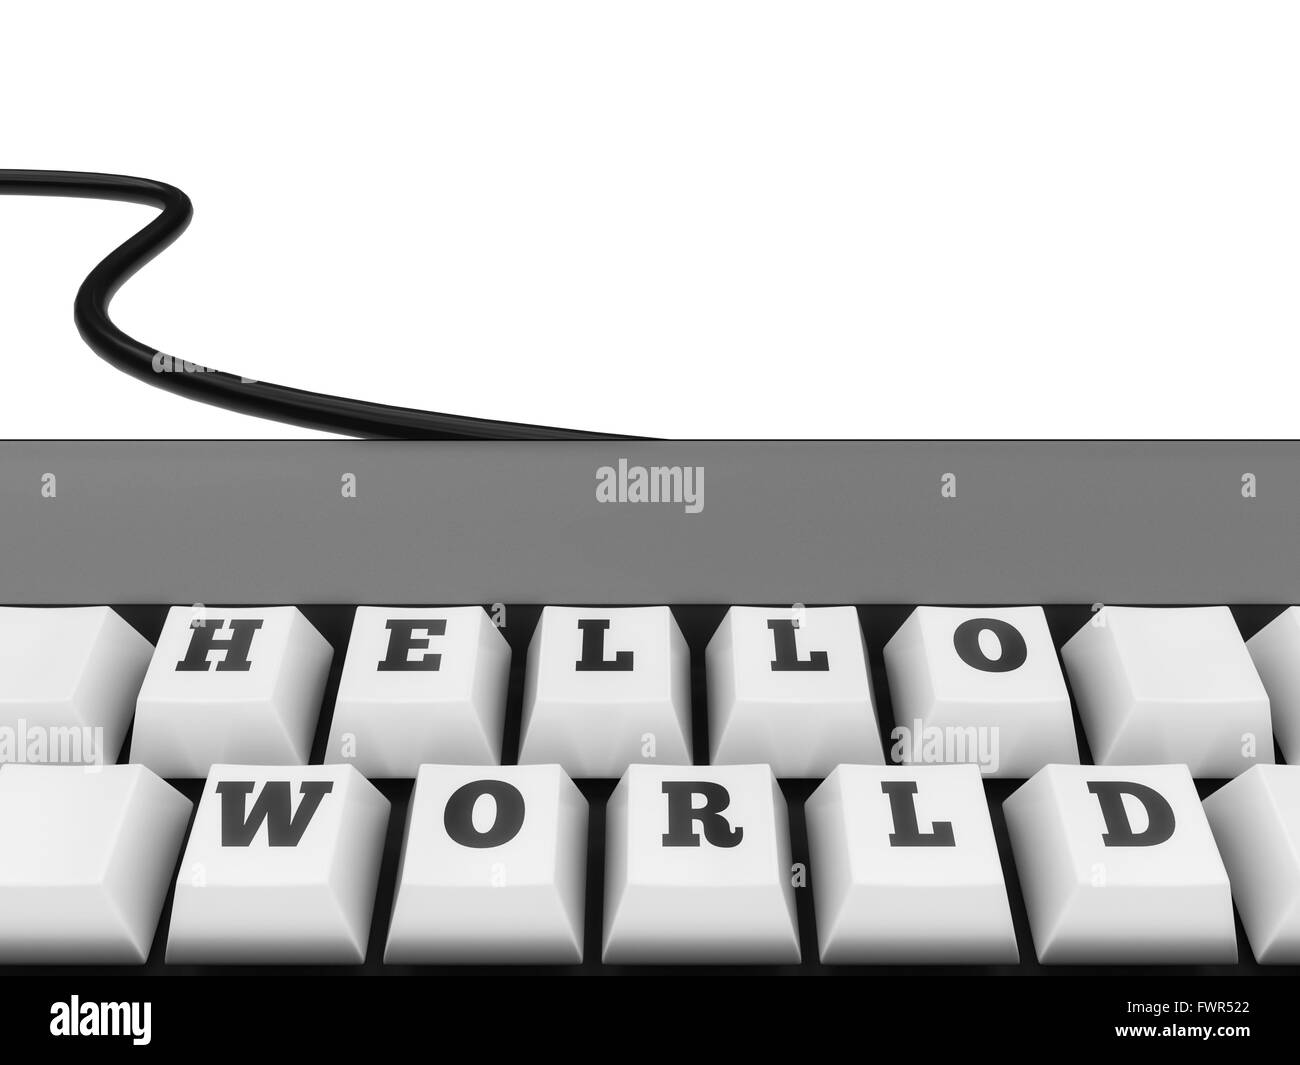 Hello World Keys on otherwise blank keyboard isolated on a white background. Stock Photo